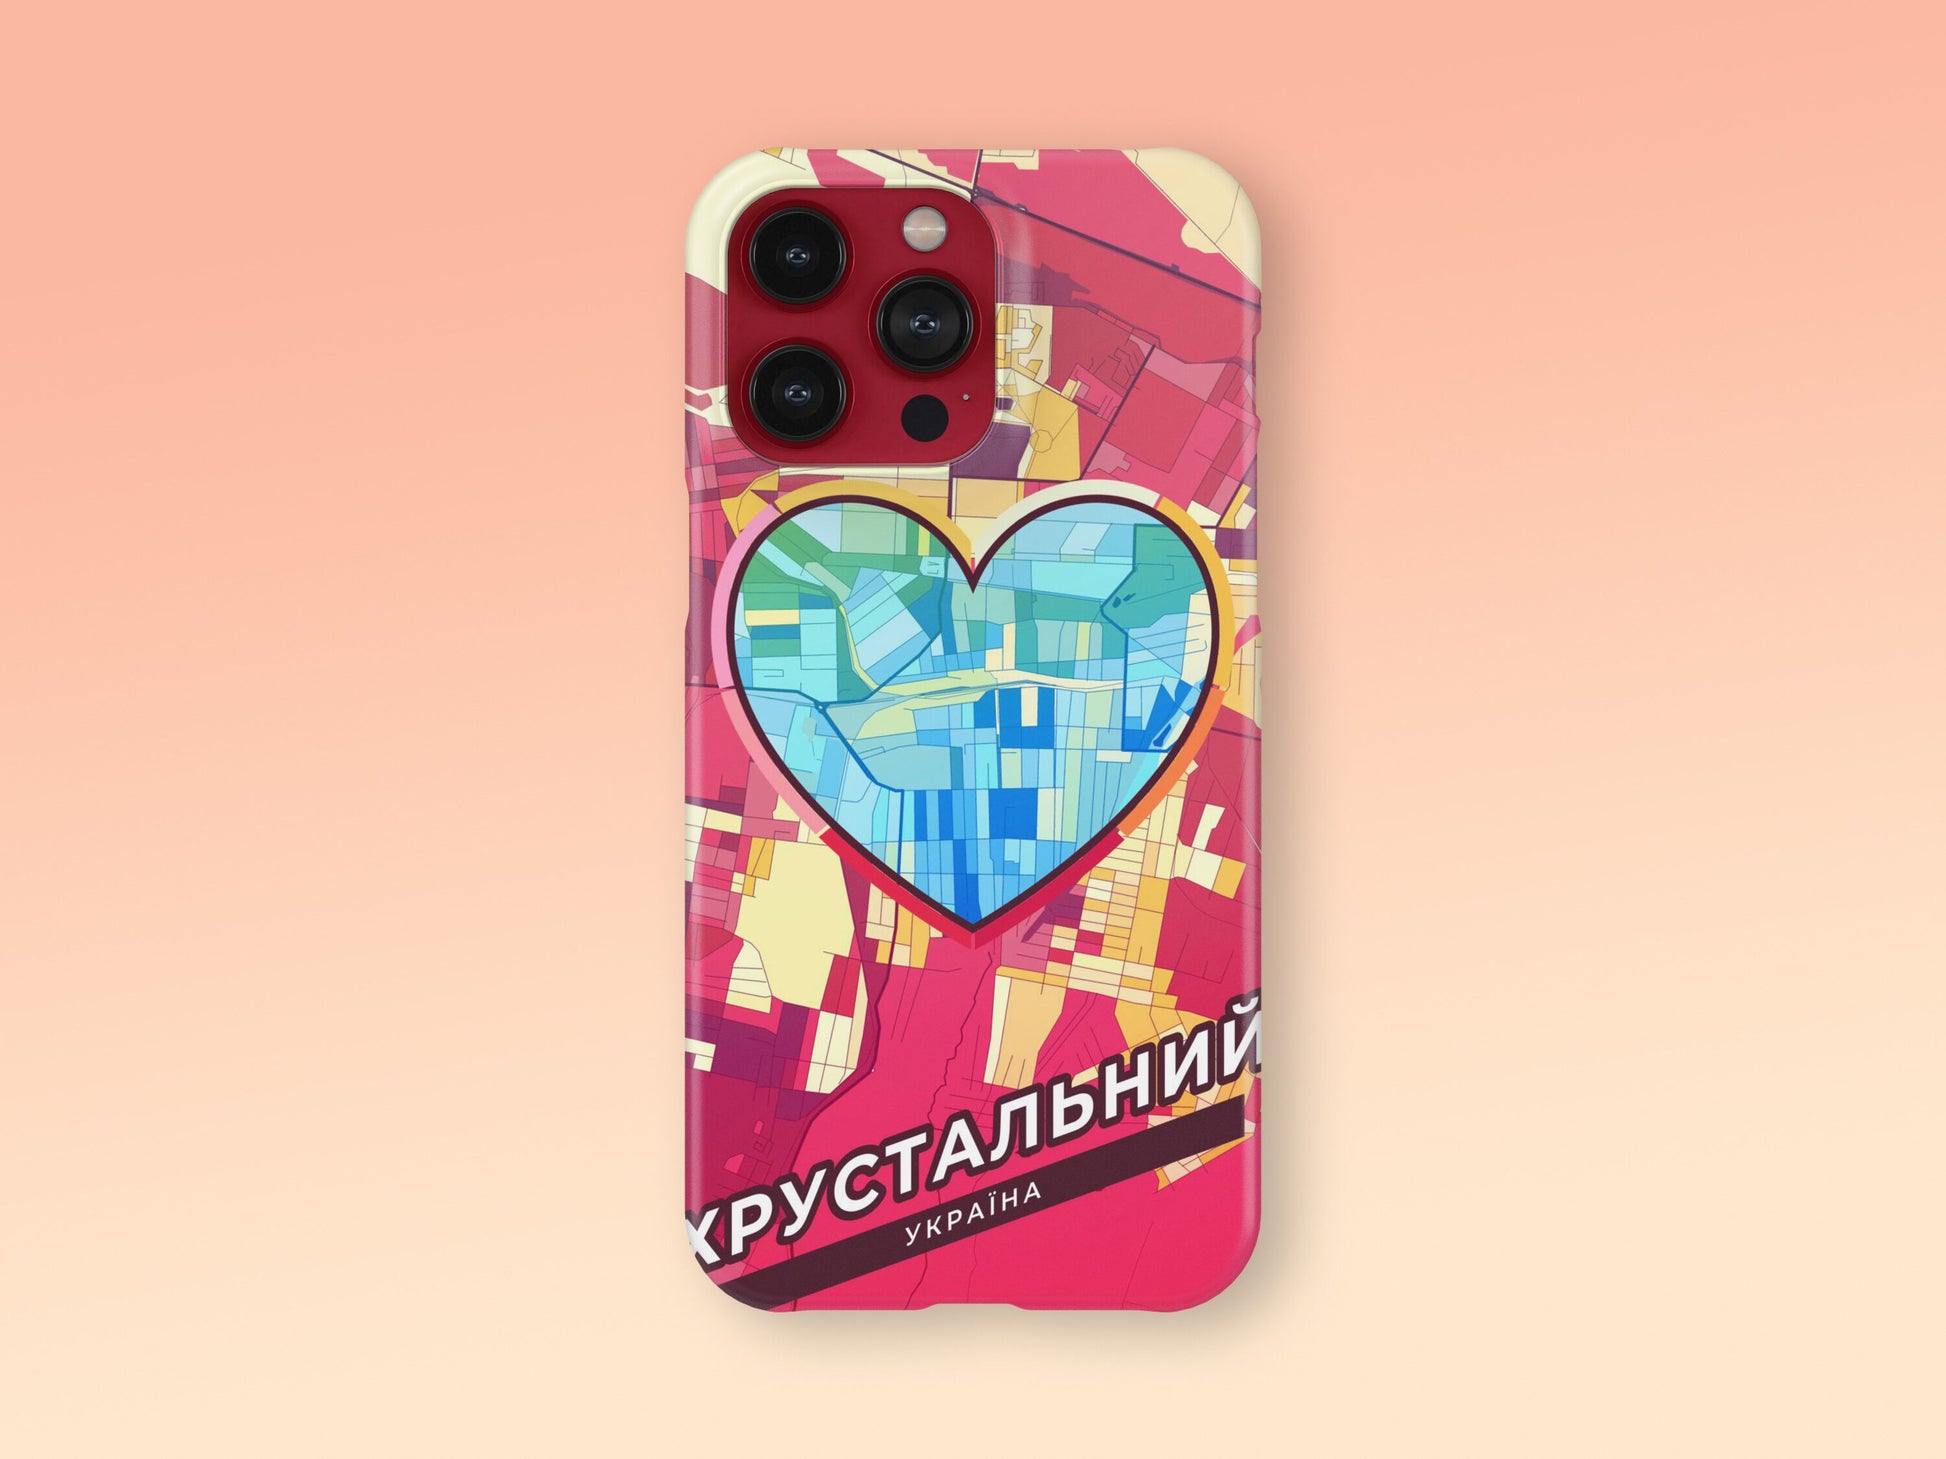 Khrustalnyi Ukraine slim phone case with colorful icon. Birthday, wedding or housewarming gift. Couple match cases. 2